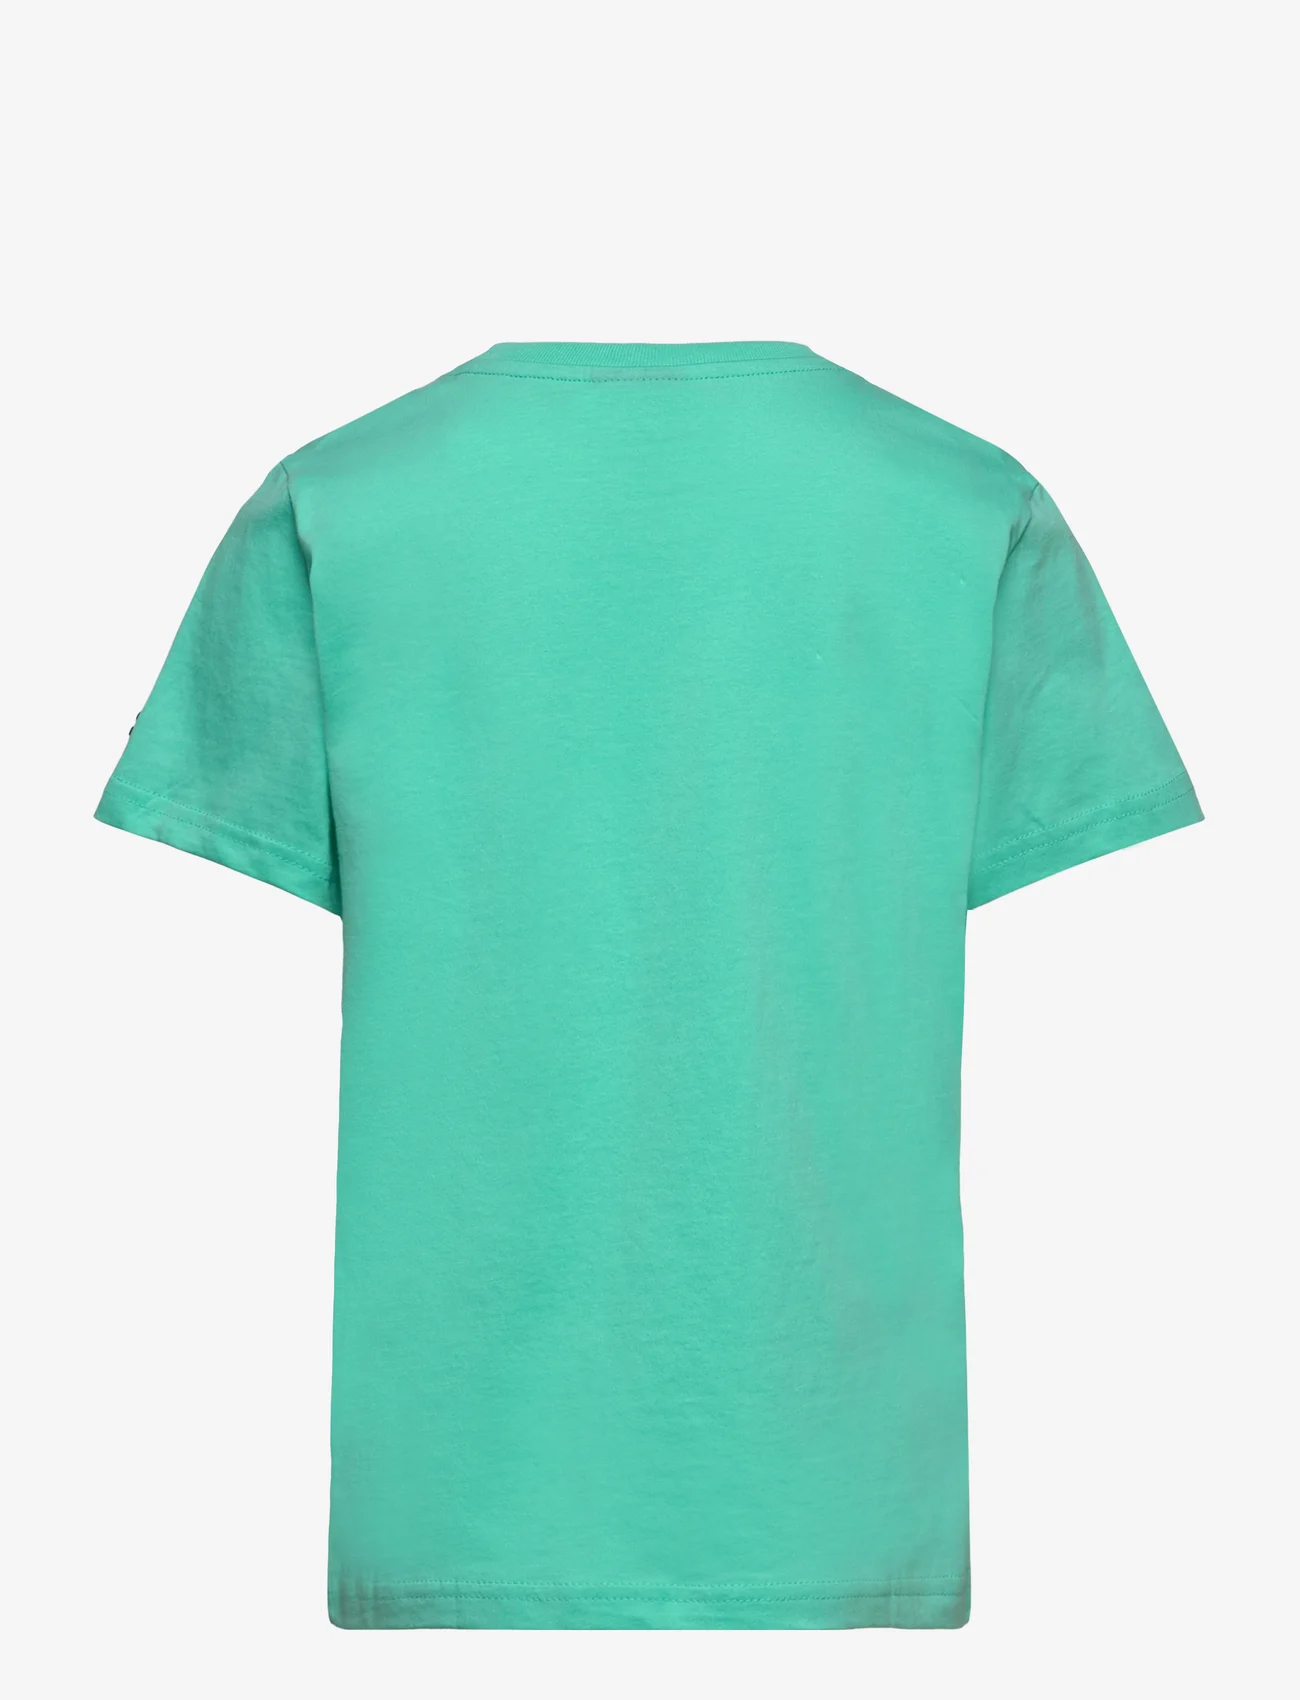 Champion - Crewneck T-Shirt - short-sleeved t-shirts - cockatoo - 1